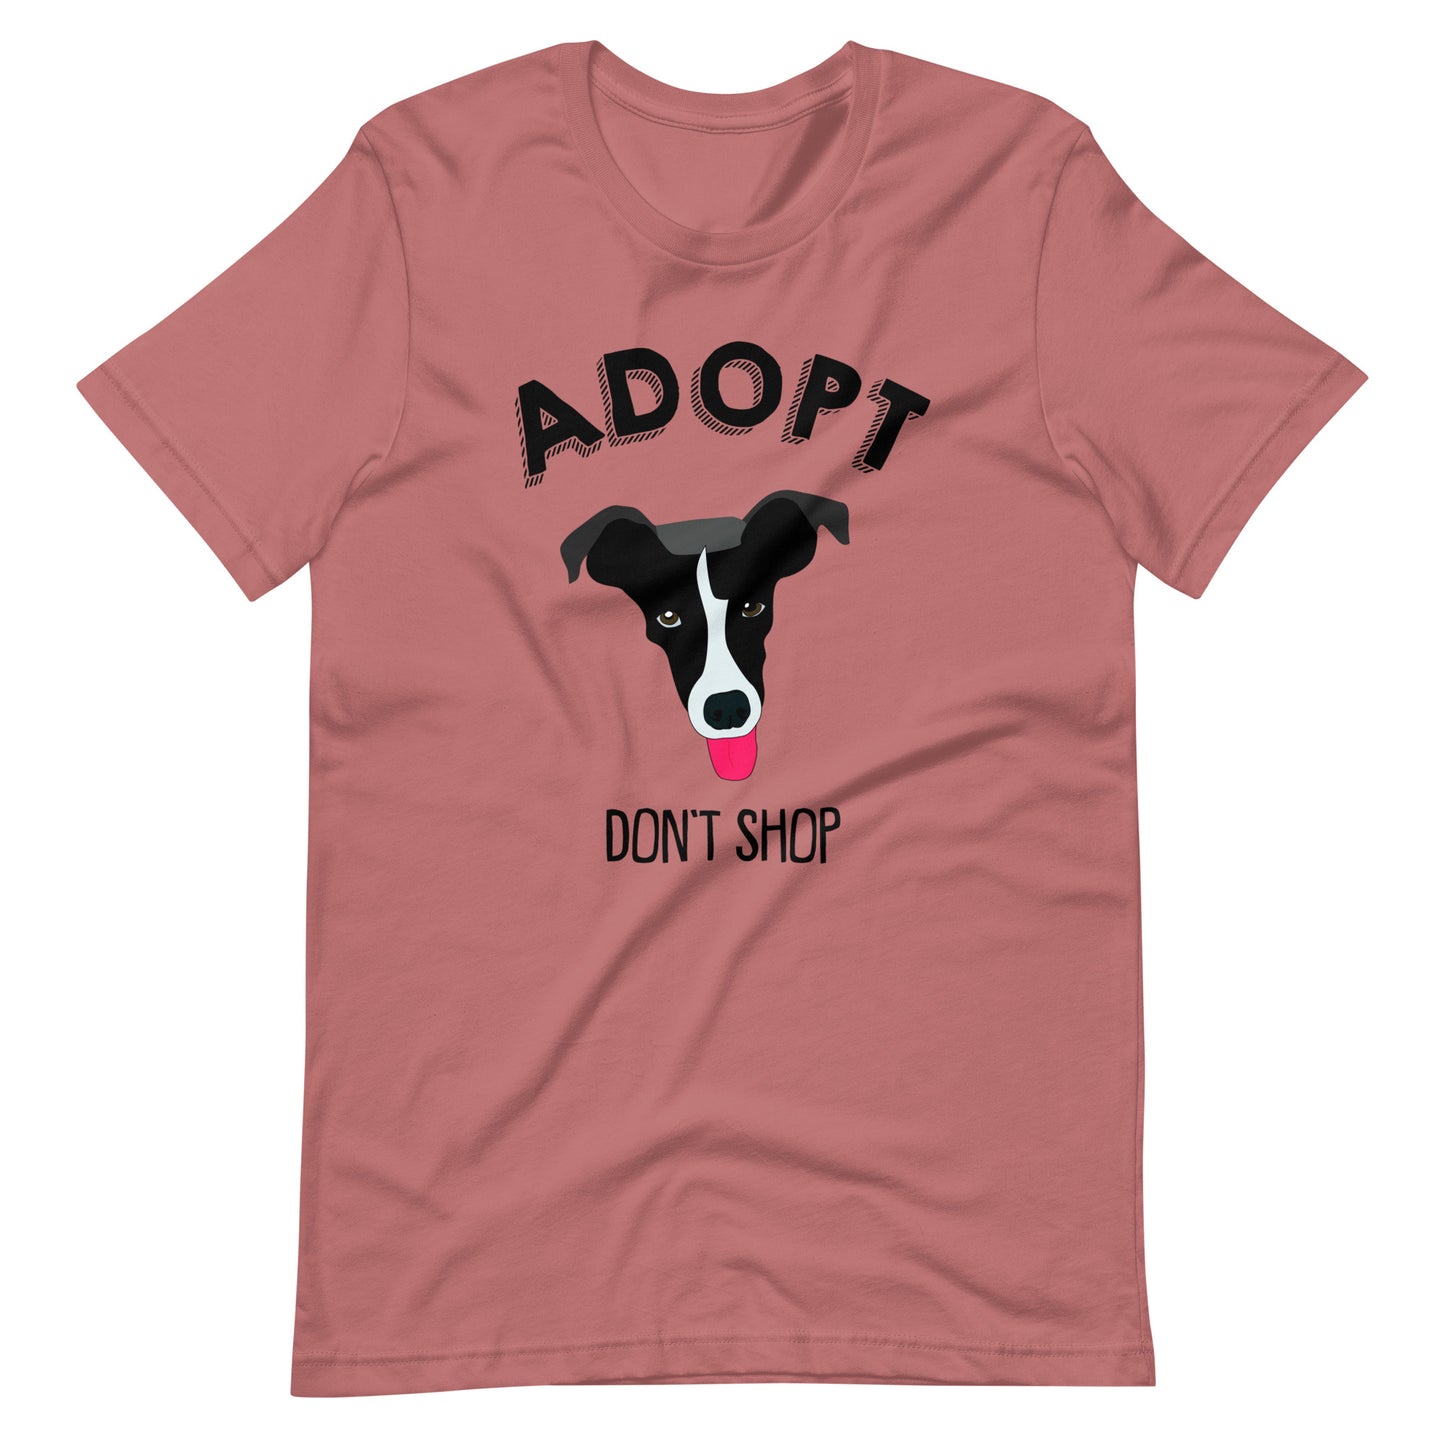 Adopt Don't Shop T-Shirt